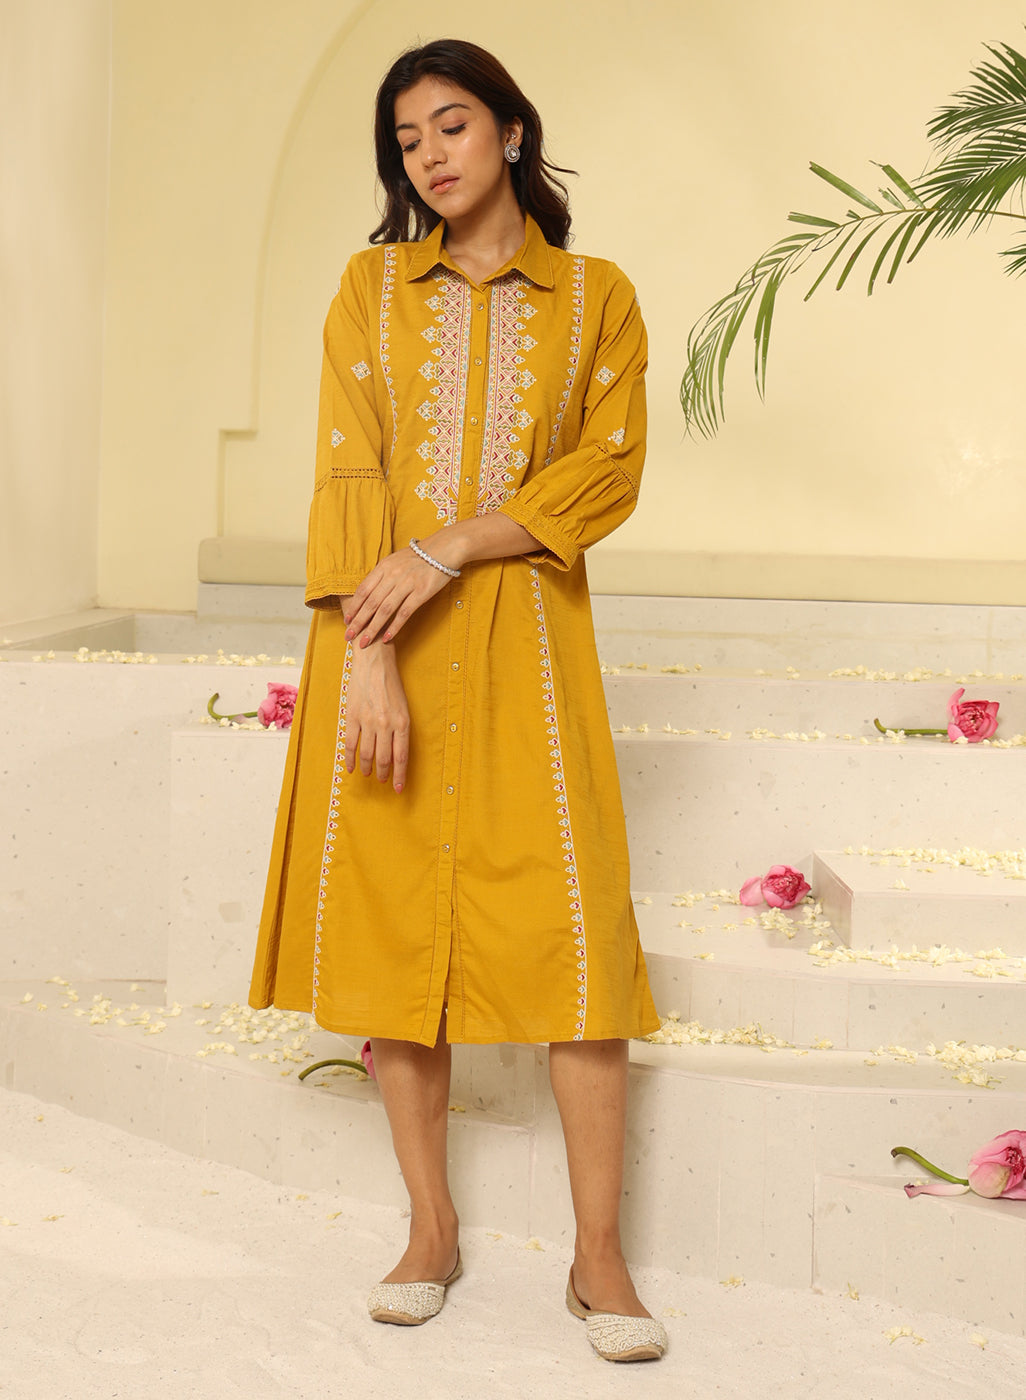 Honey Yellow Embroidered Ethnic Dress